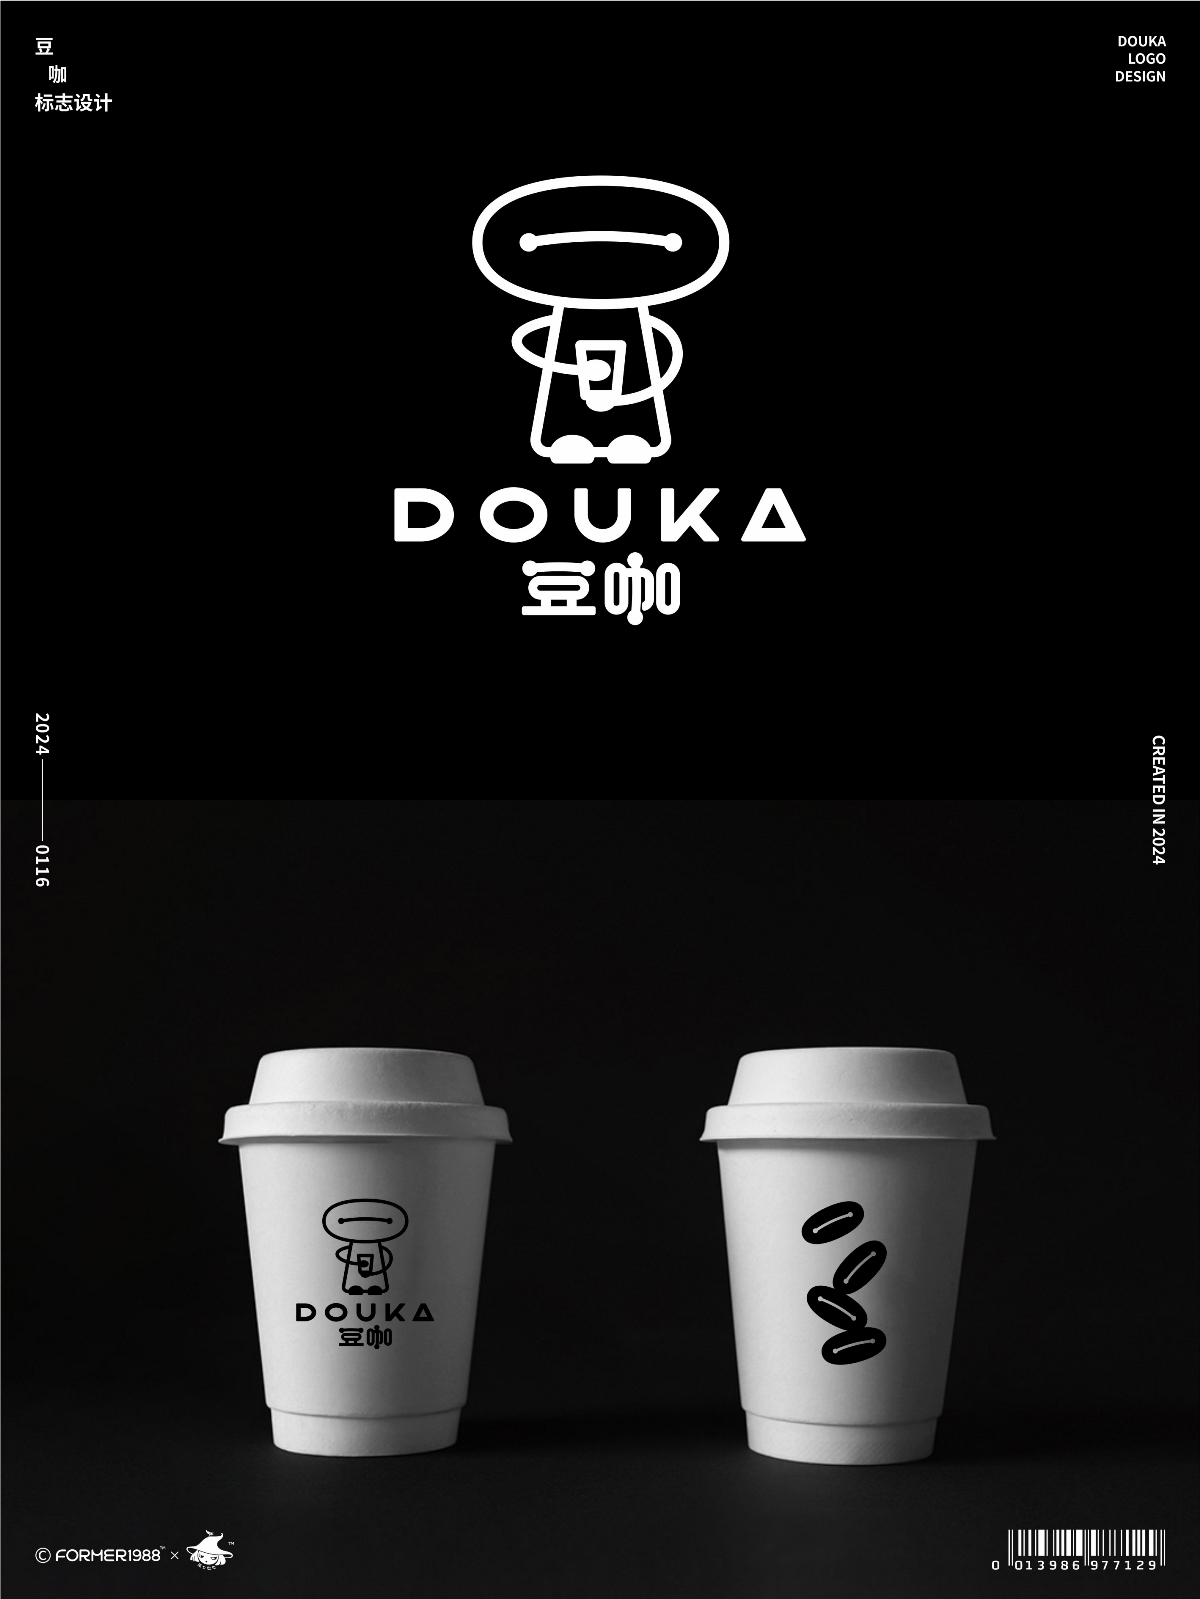 品牌字体和logo设计 | 2024年1月